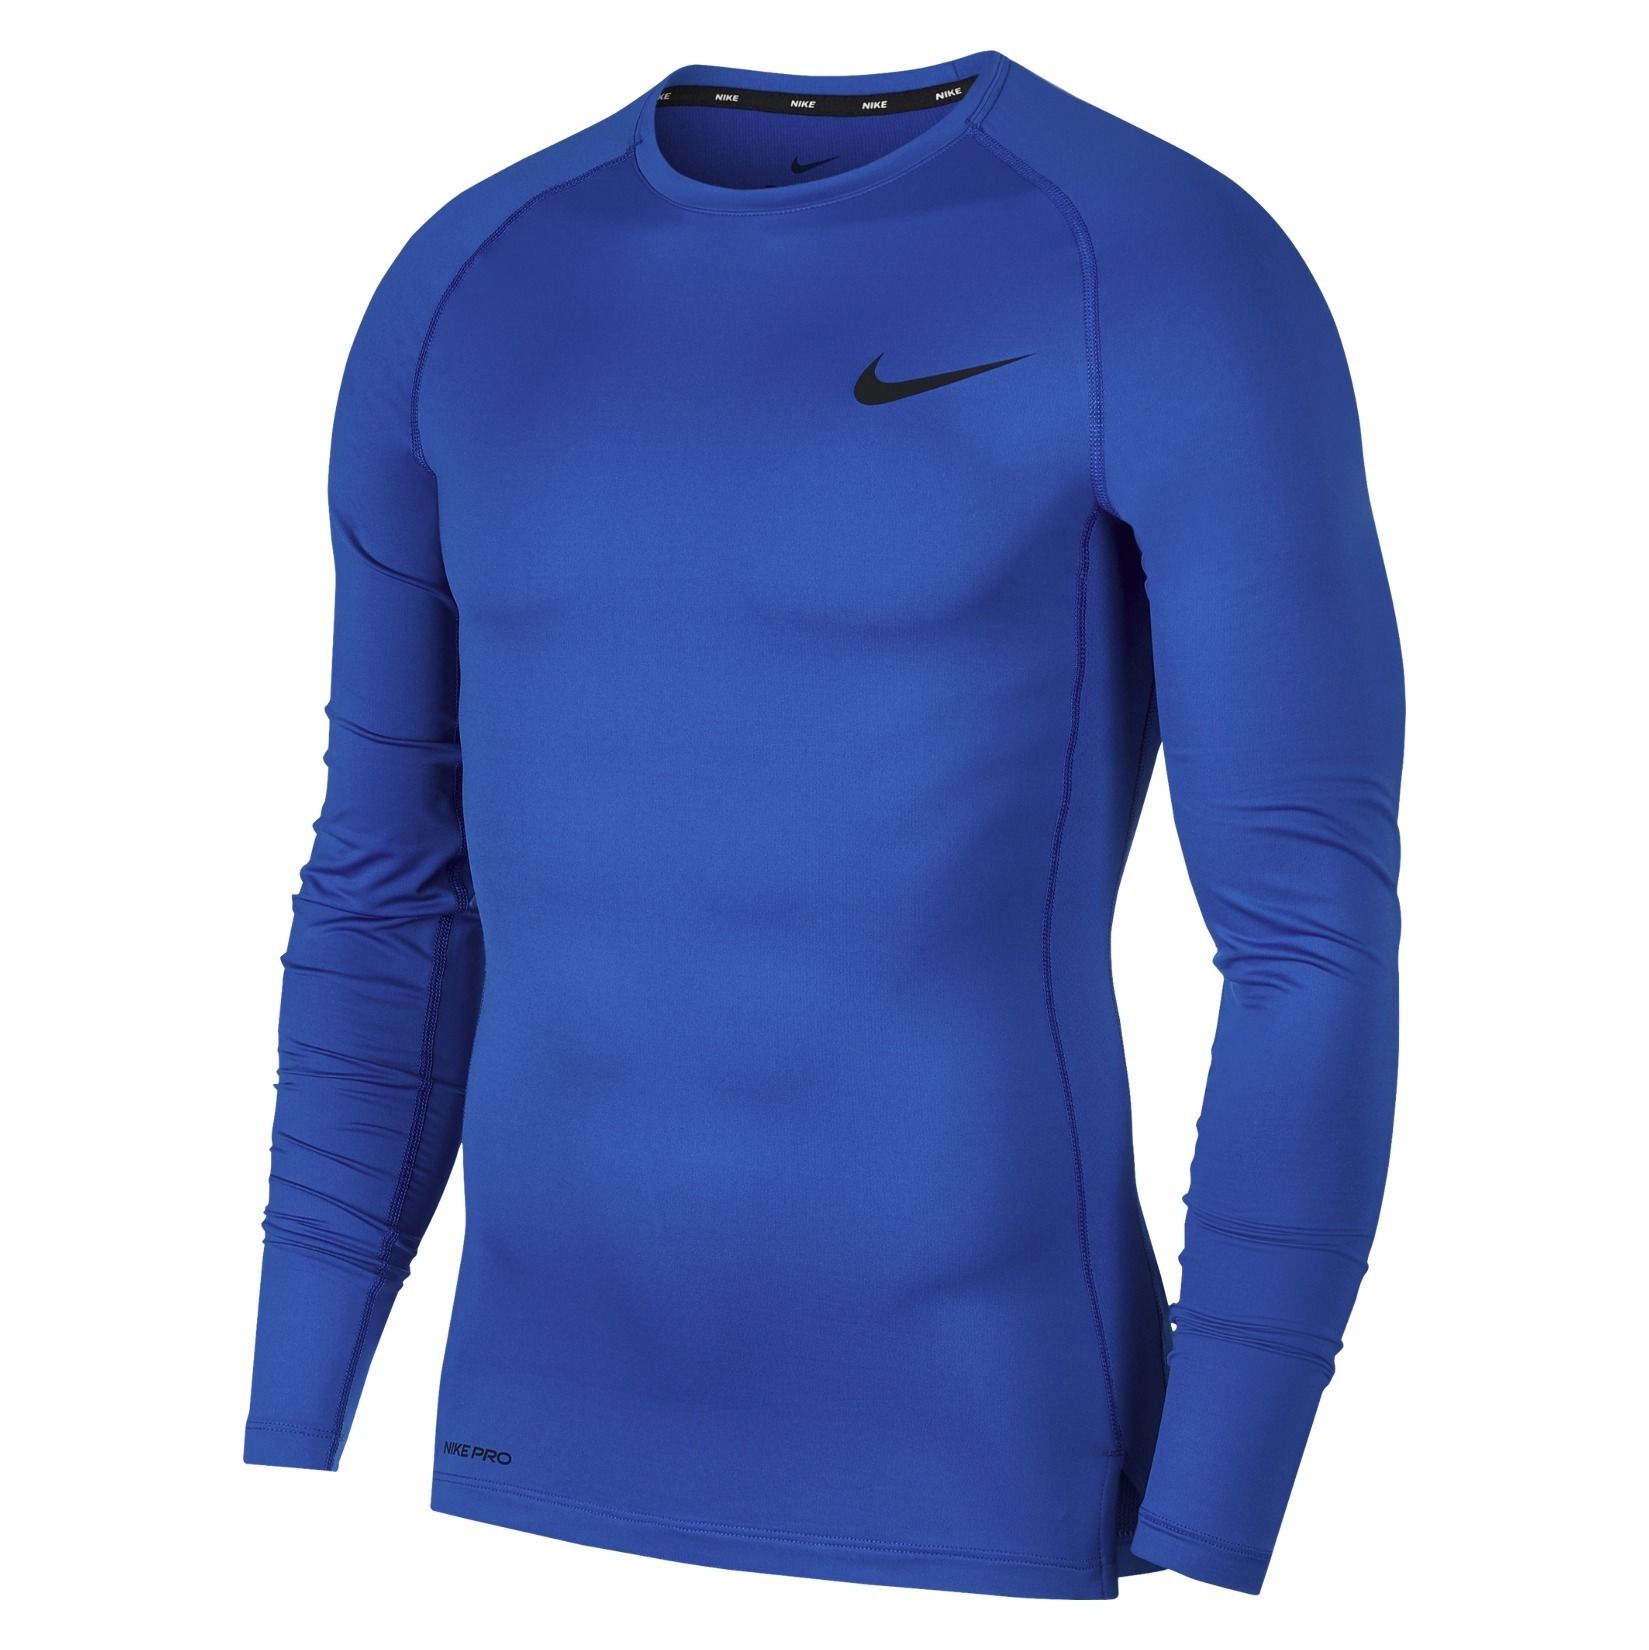 Nike Pro Long Sleeve Top - Kitlocker.com